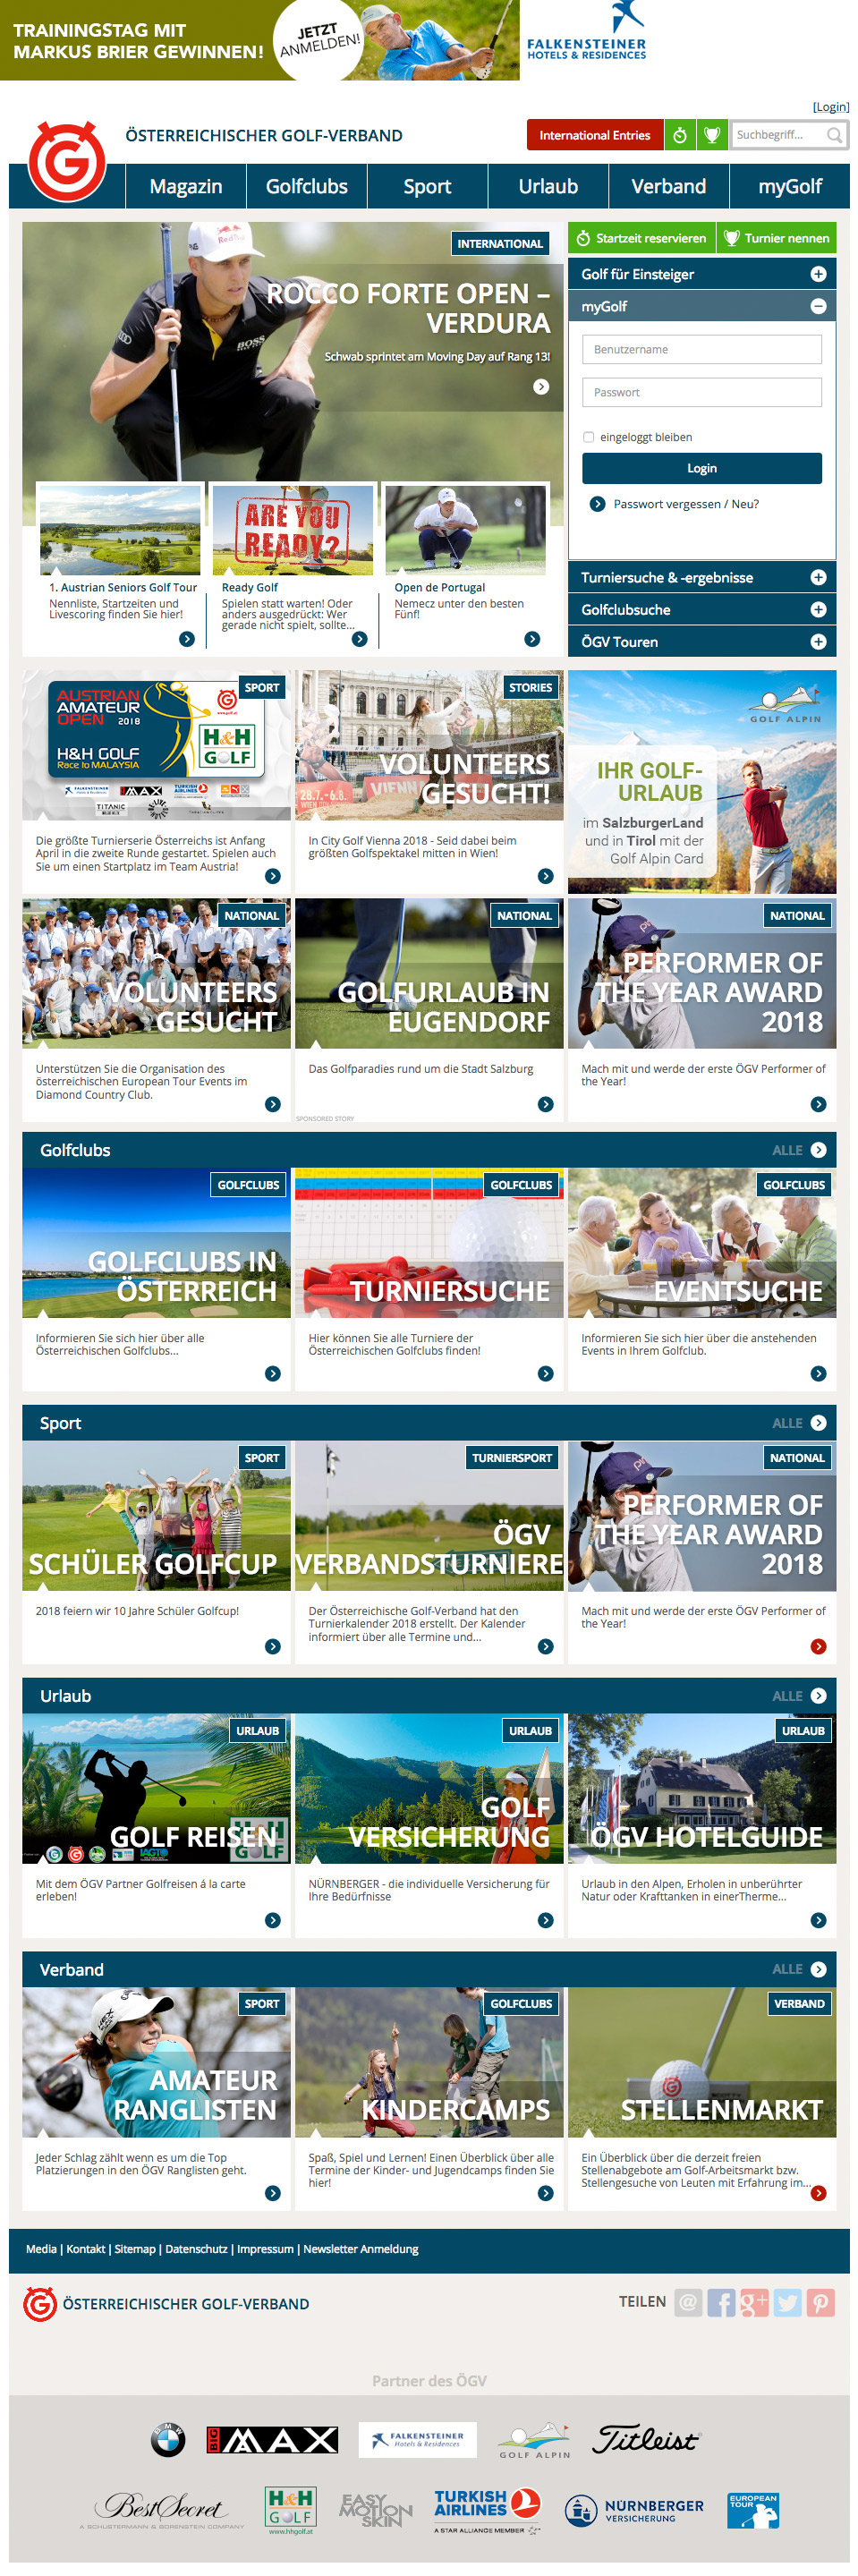 Golf federation website